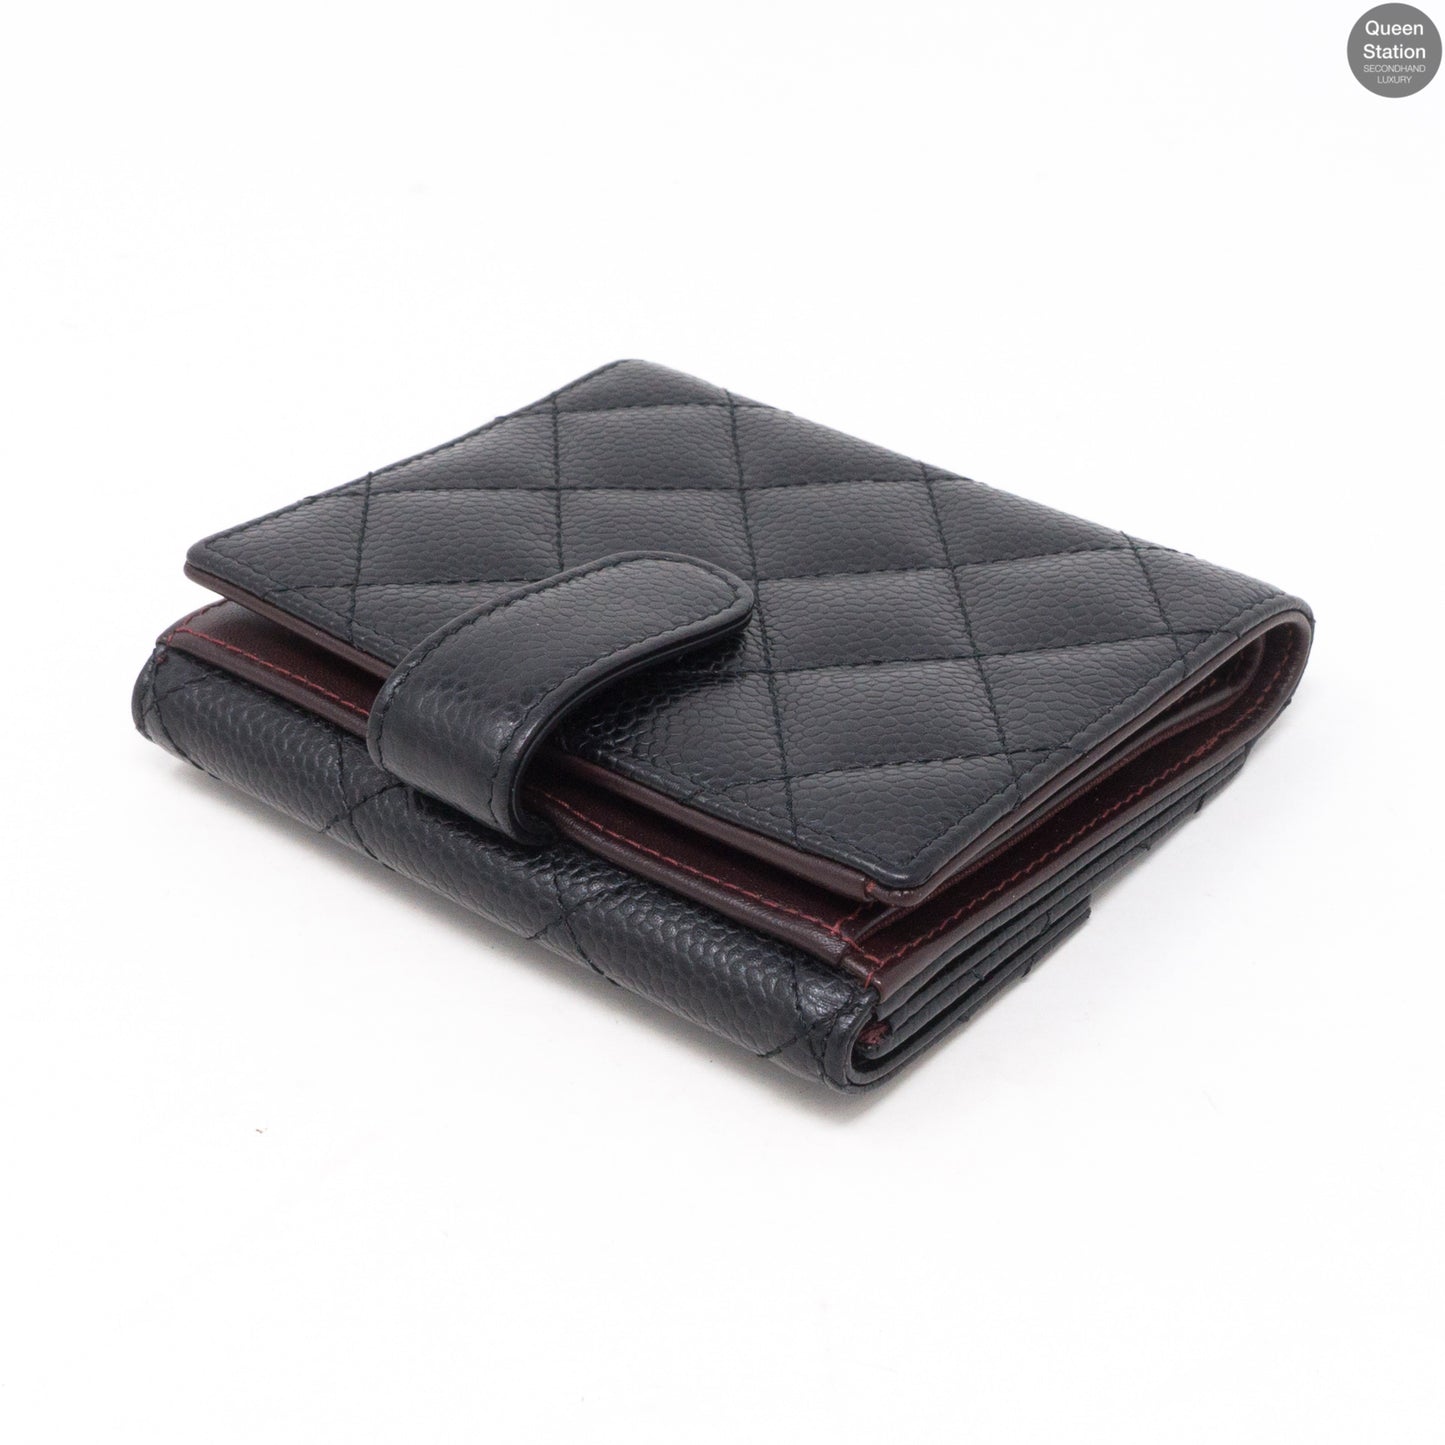 Bi-Fold CC Wallet Black Caviarskin Leather